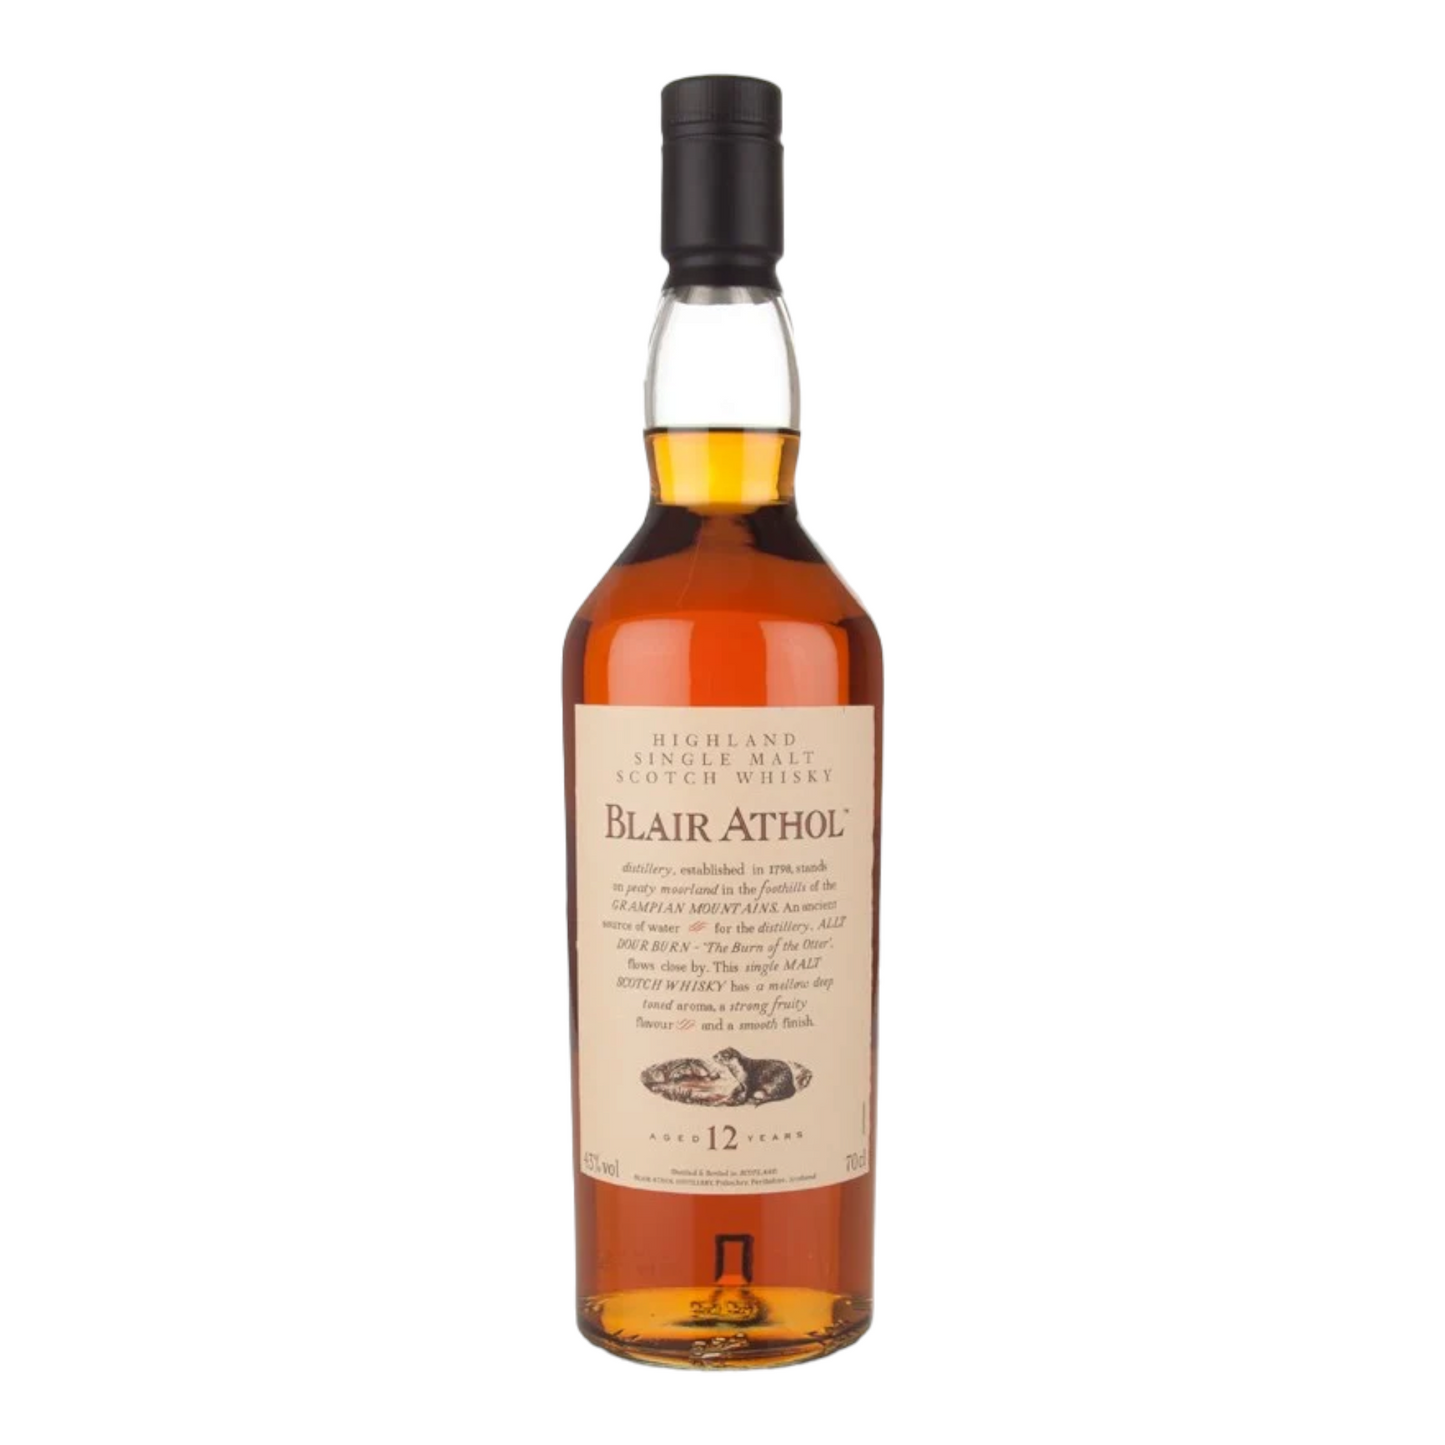 Blair Athol 12 Years Flora&Fauna系列 Single Malt 700ml whisky Lillion Wine Offer 999x2 Blair Athol sherry